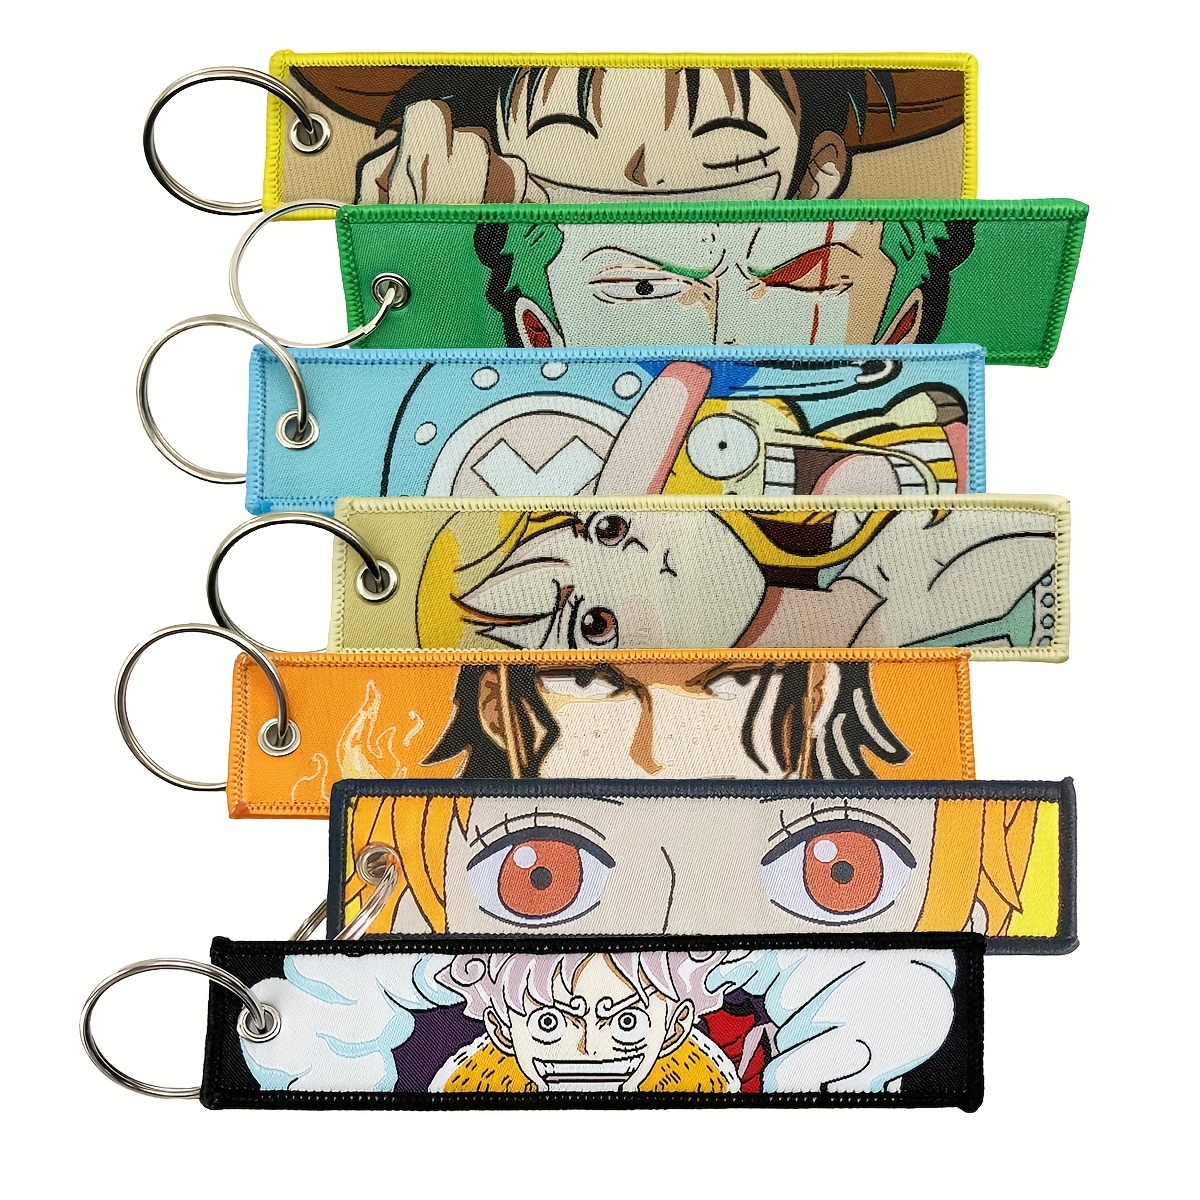 Ishine Anime Keychains A Set Of Anime Figure Keychain Cartoon Figures Key  Chains Bag Pendants Nidouzi Accessories Pendant Adult Children's Gifts |  forum.iktva.sa